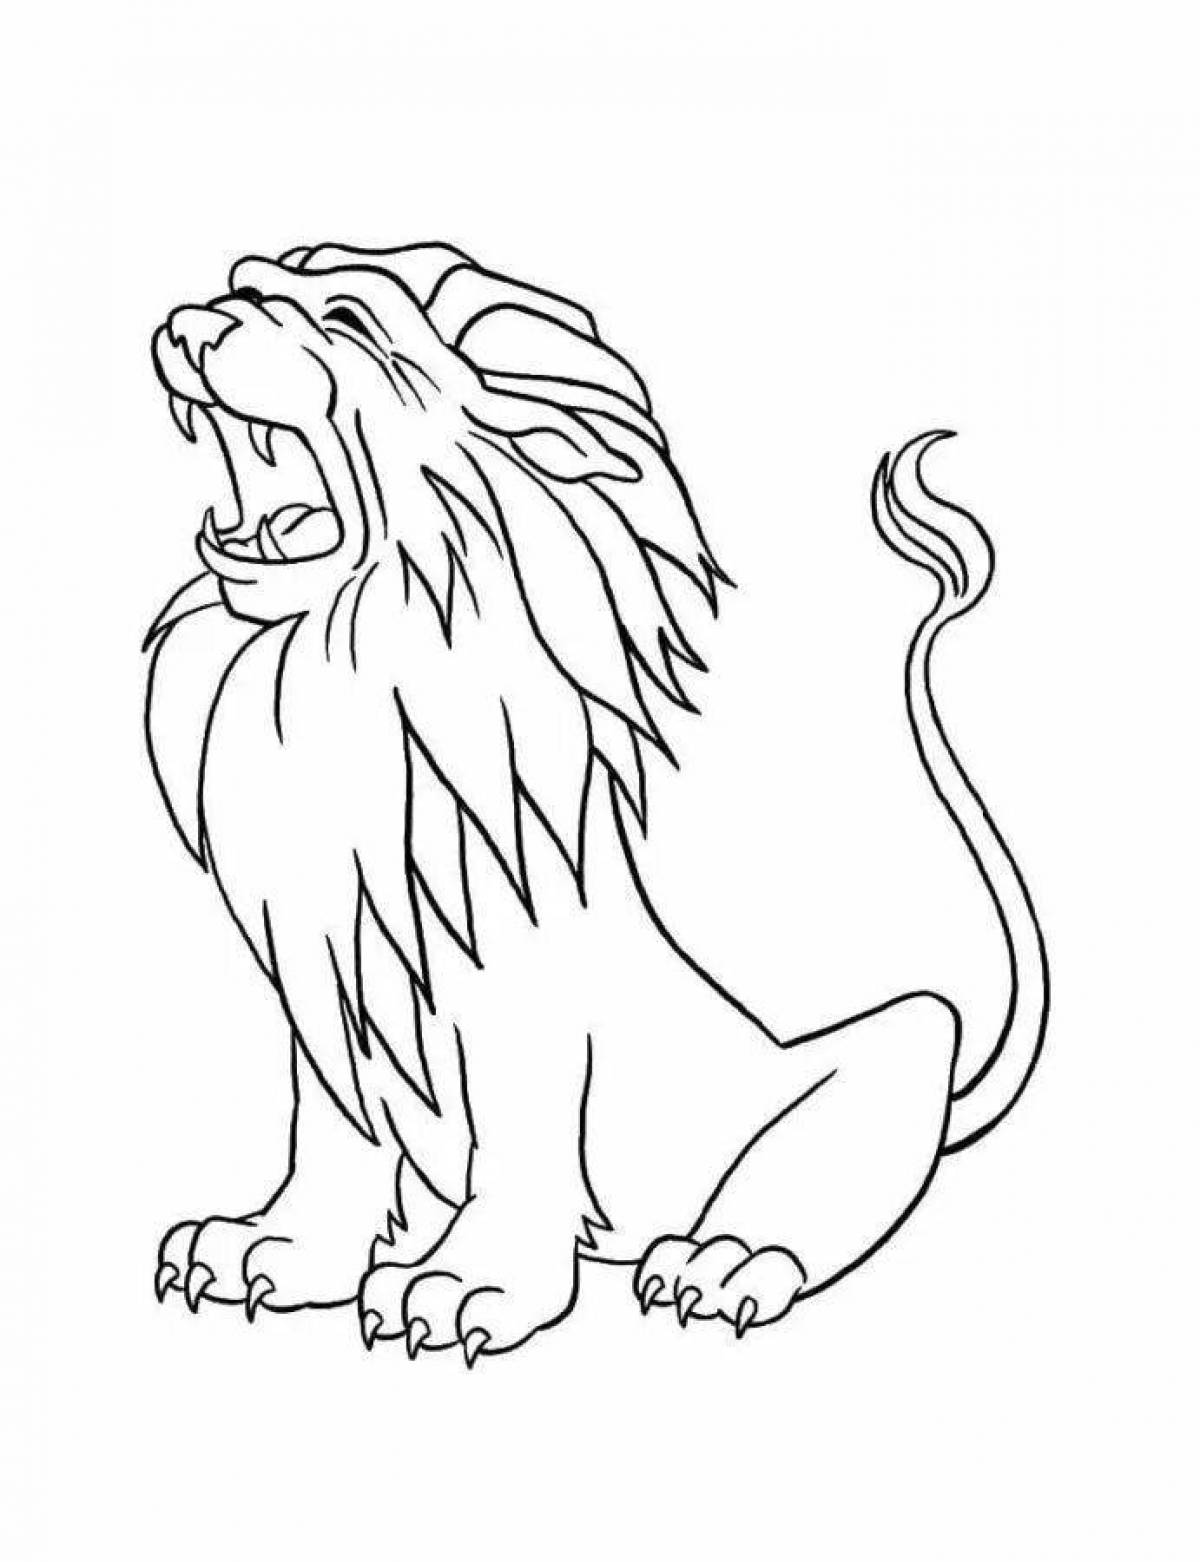 Strike Lion coloring page